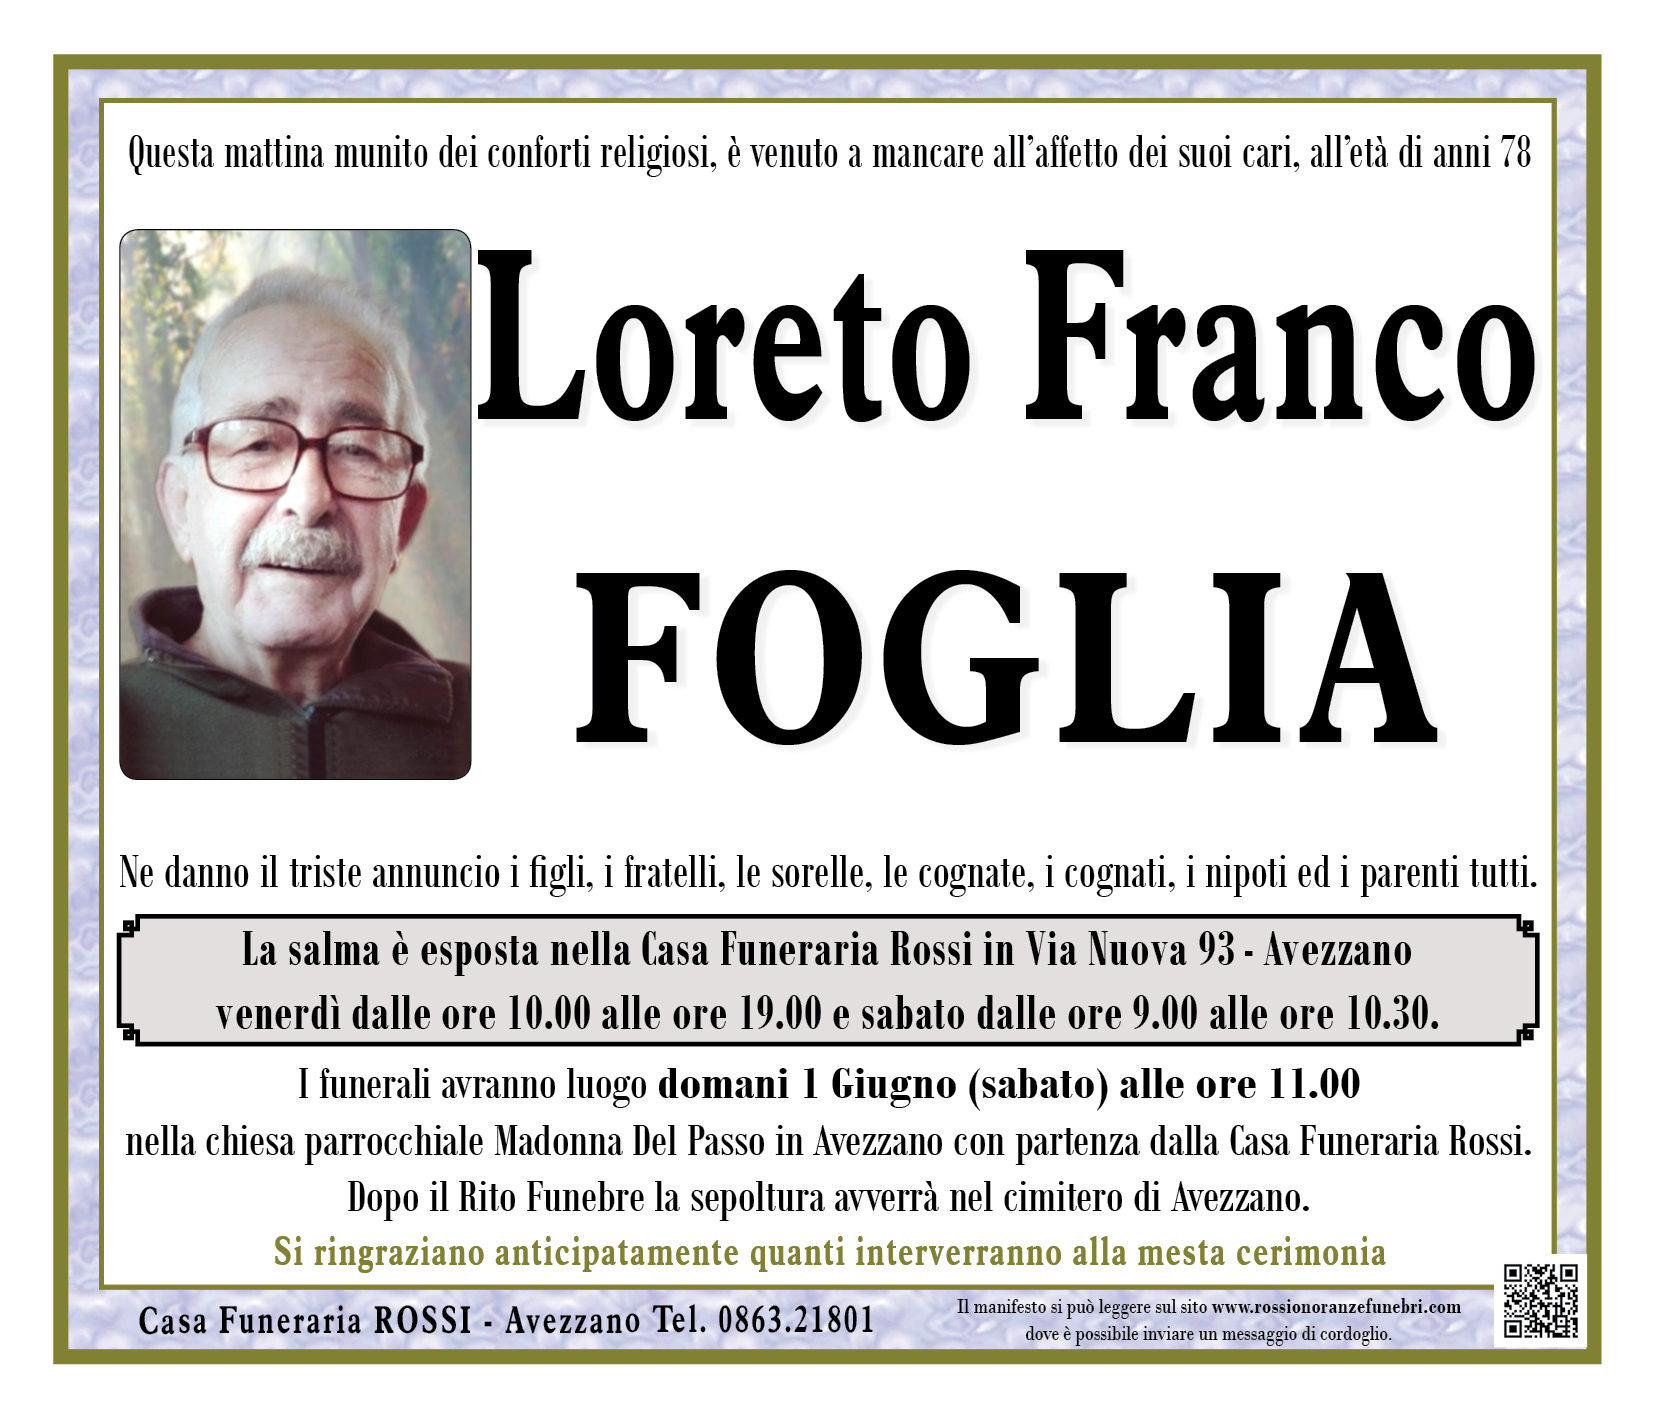 Loreto Franco Foglia